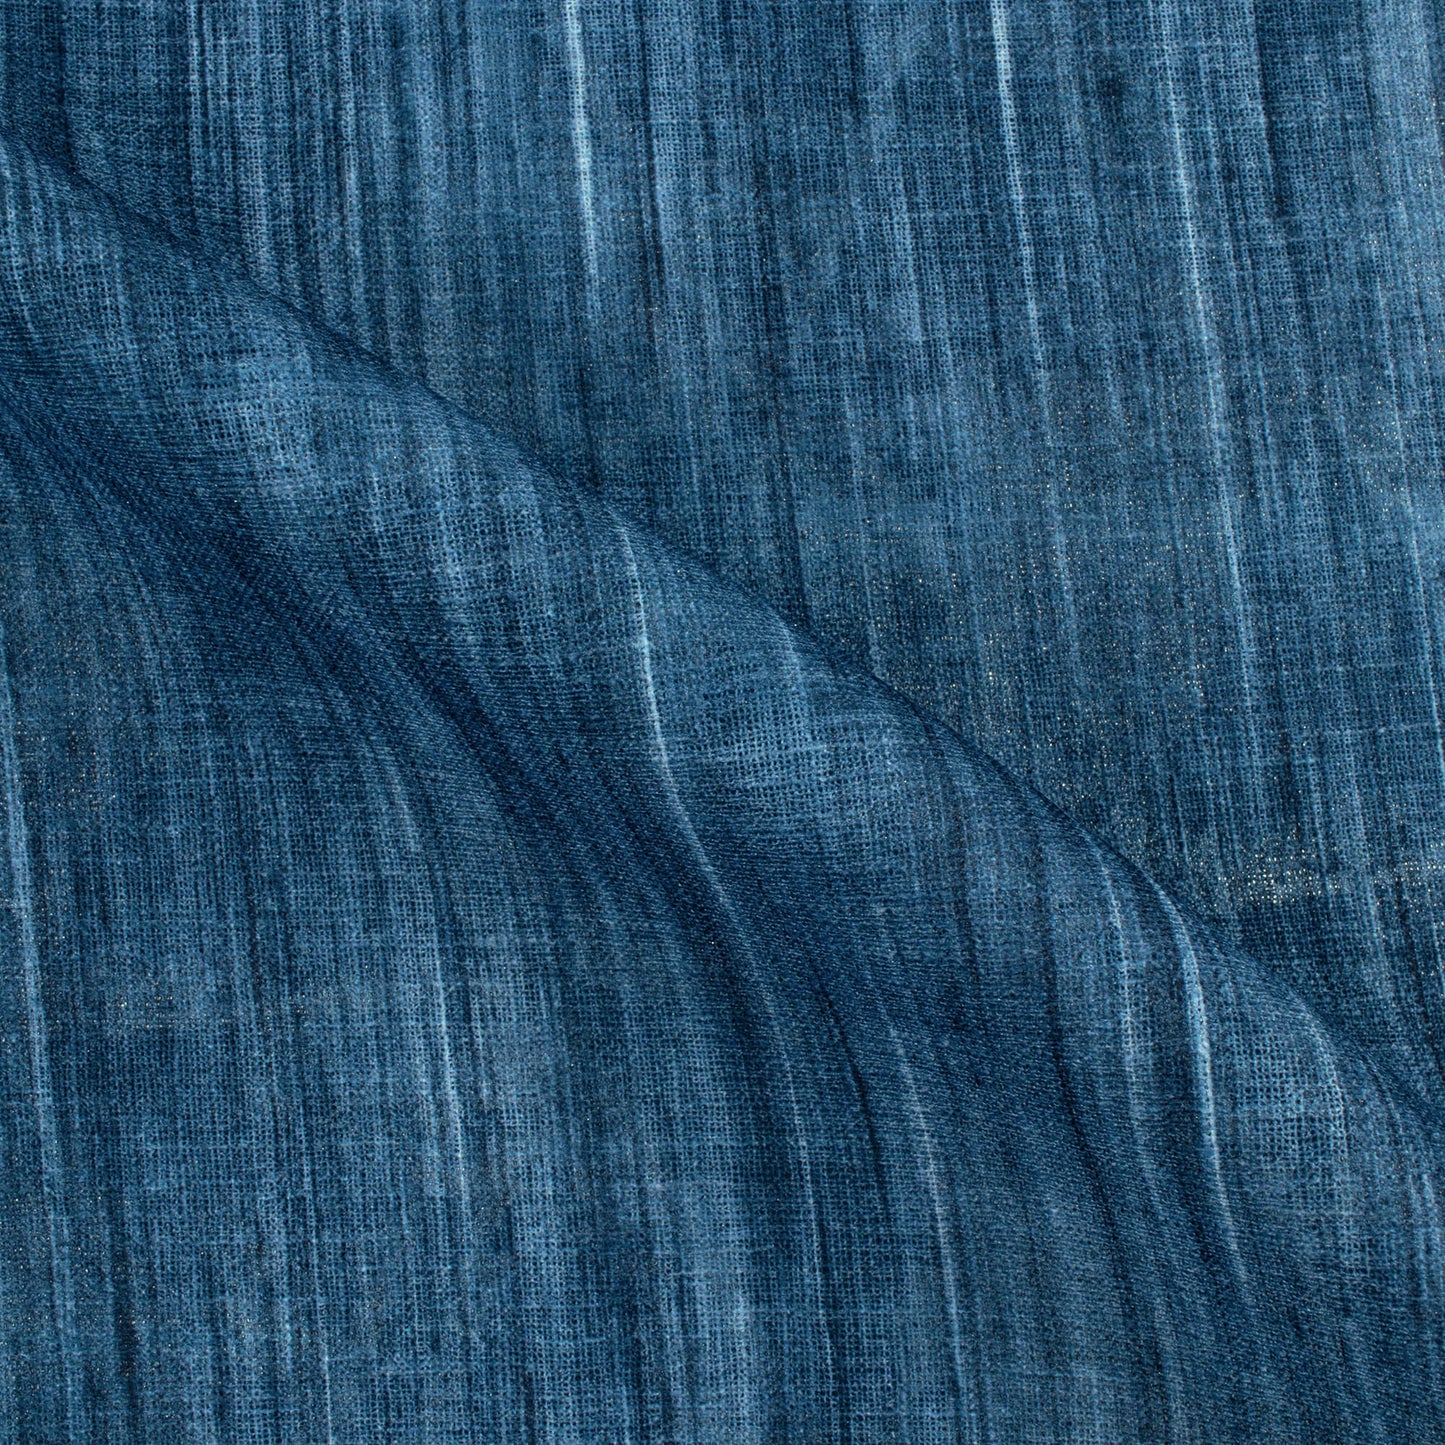 Regal Blue Textured Silver Foil Premium Sheer Fabric (Width 54 Inches)